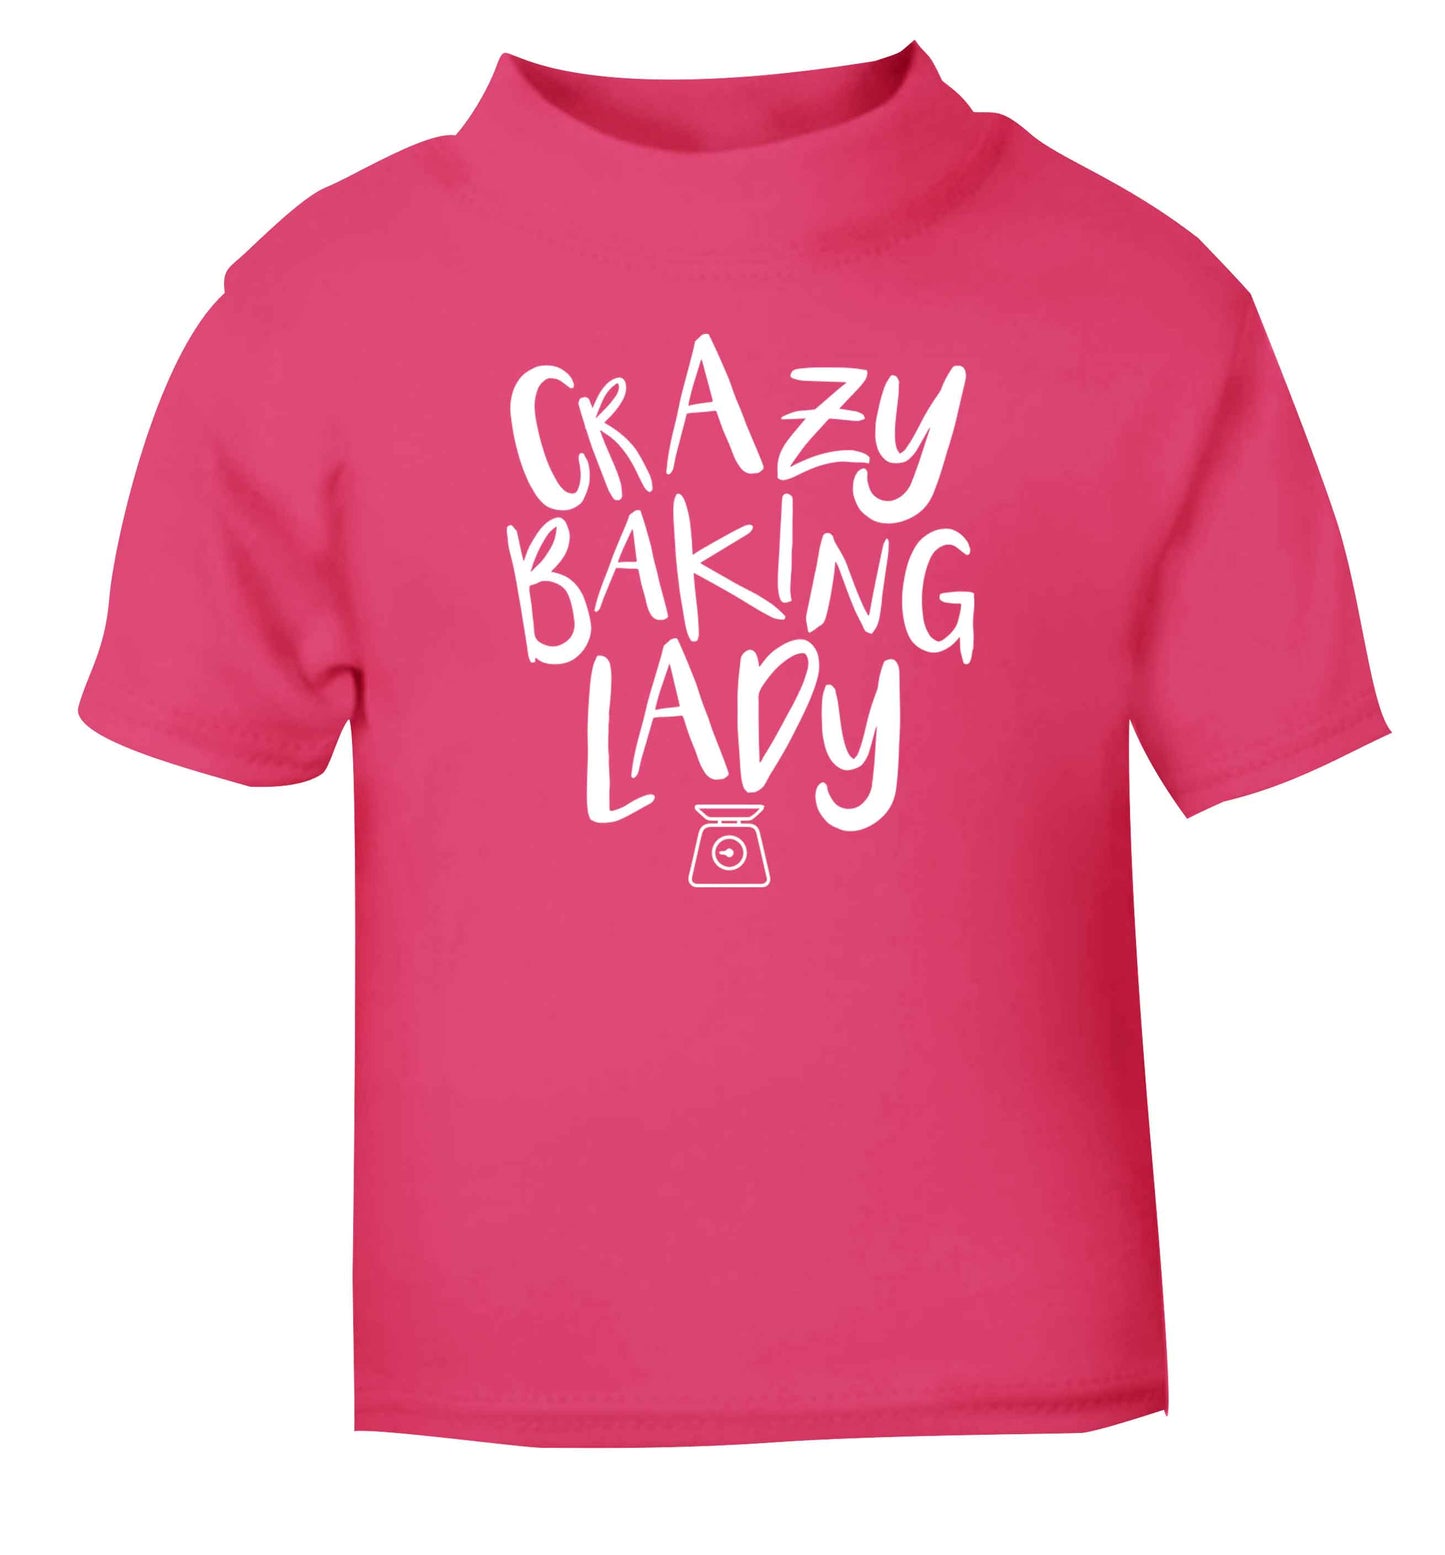 Crazy baking lady pink Baby Toddler Tshirt 2 Years